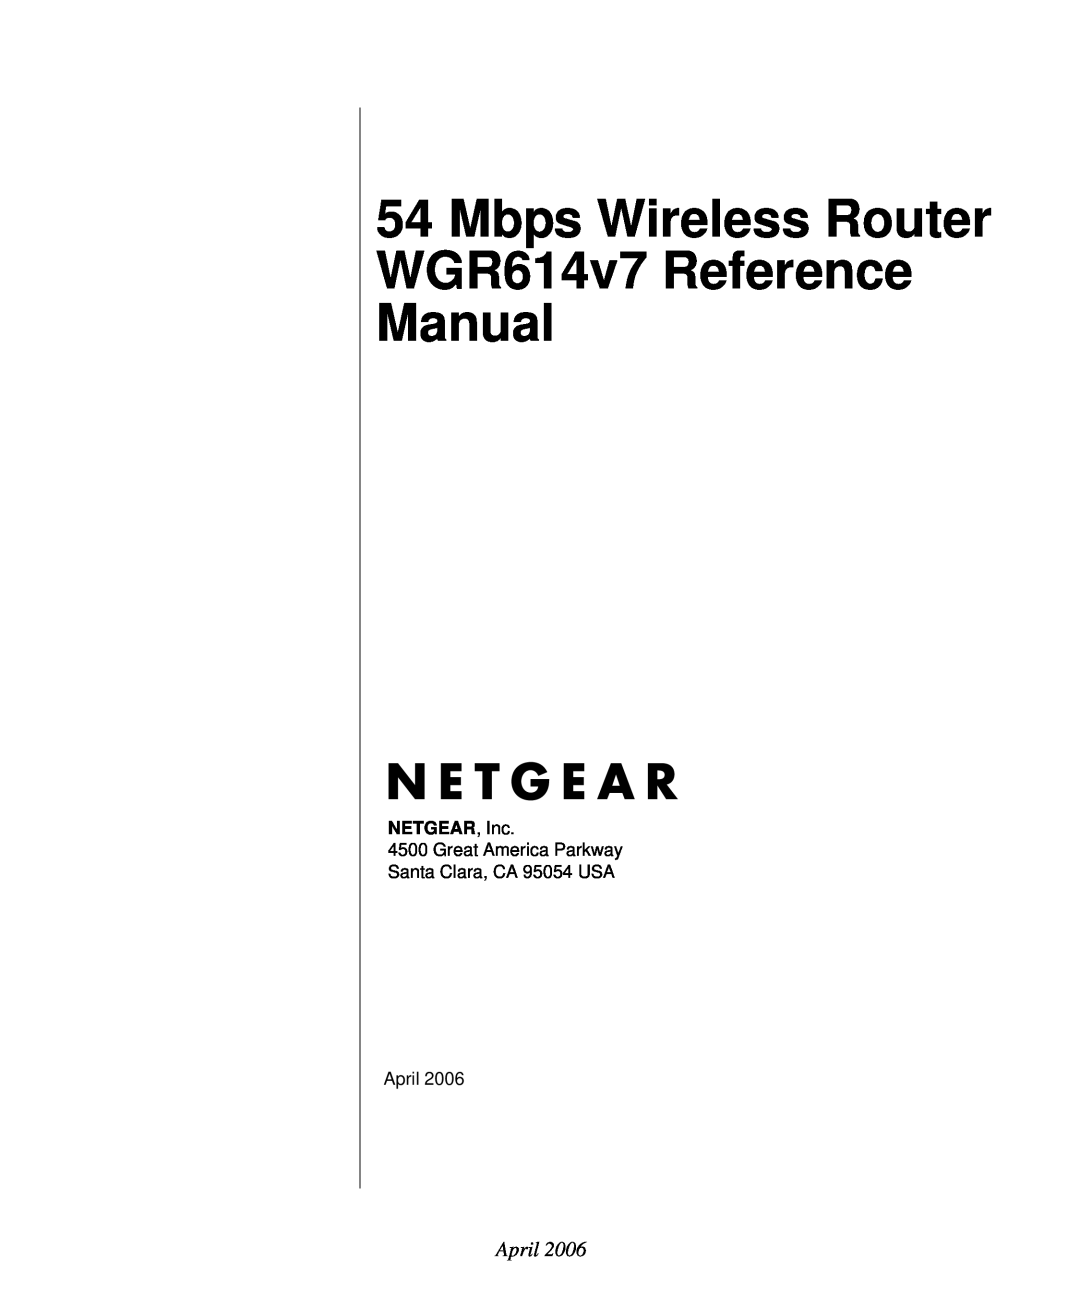 NETGEAR manual Mbps Wireless Router WGR614v7 Reference Manual, April, NETGEAR, Inc 